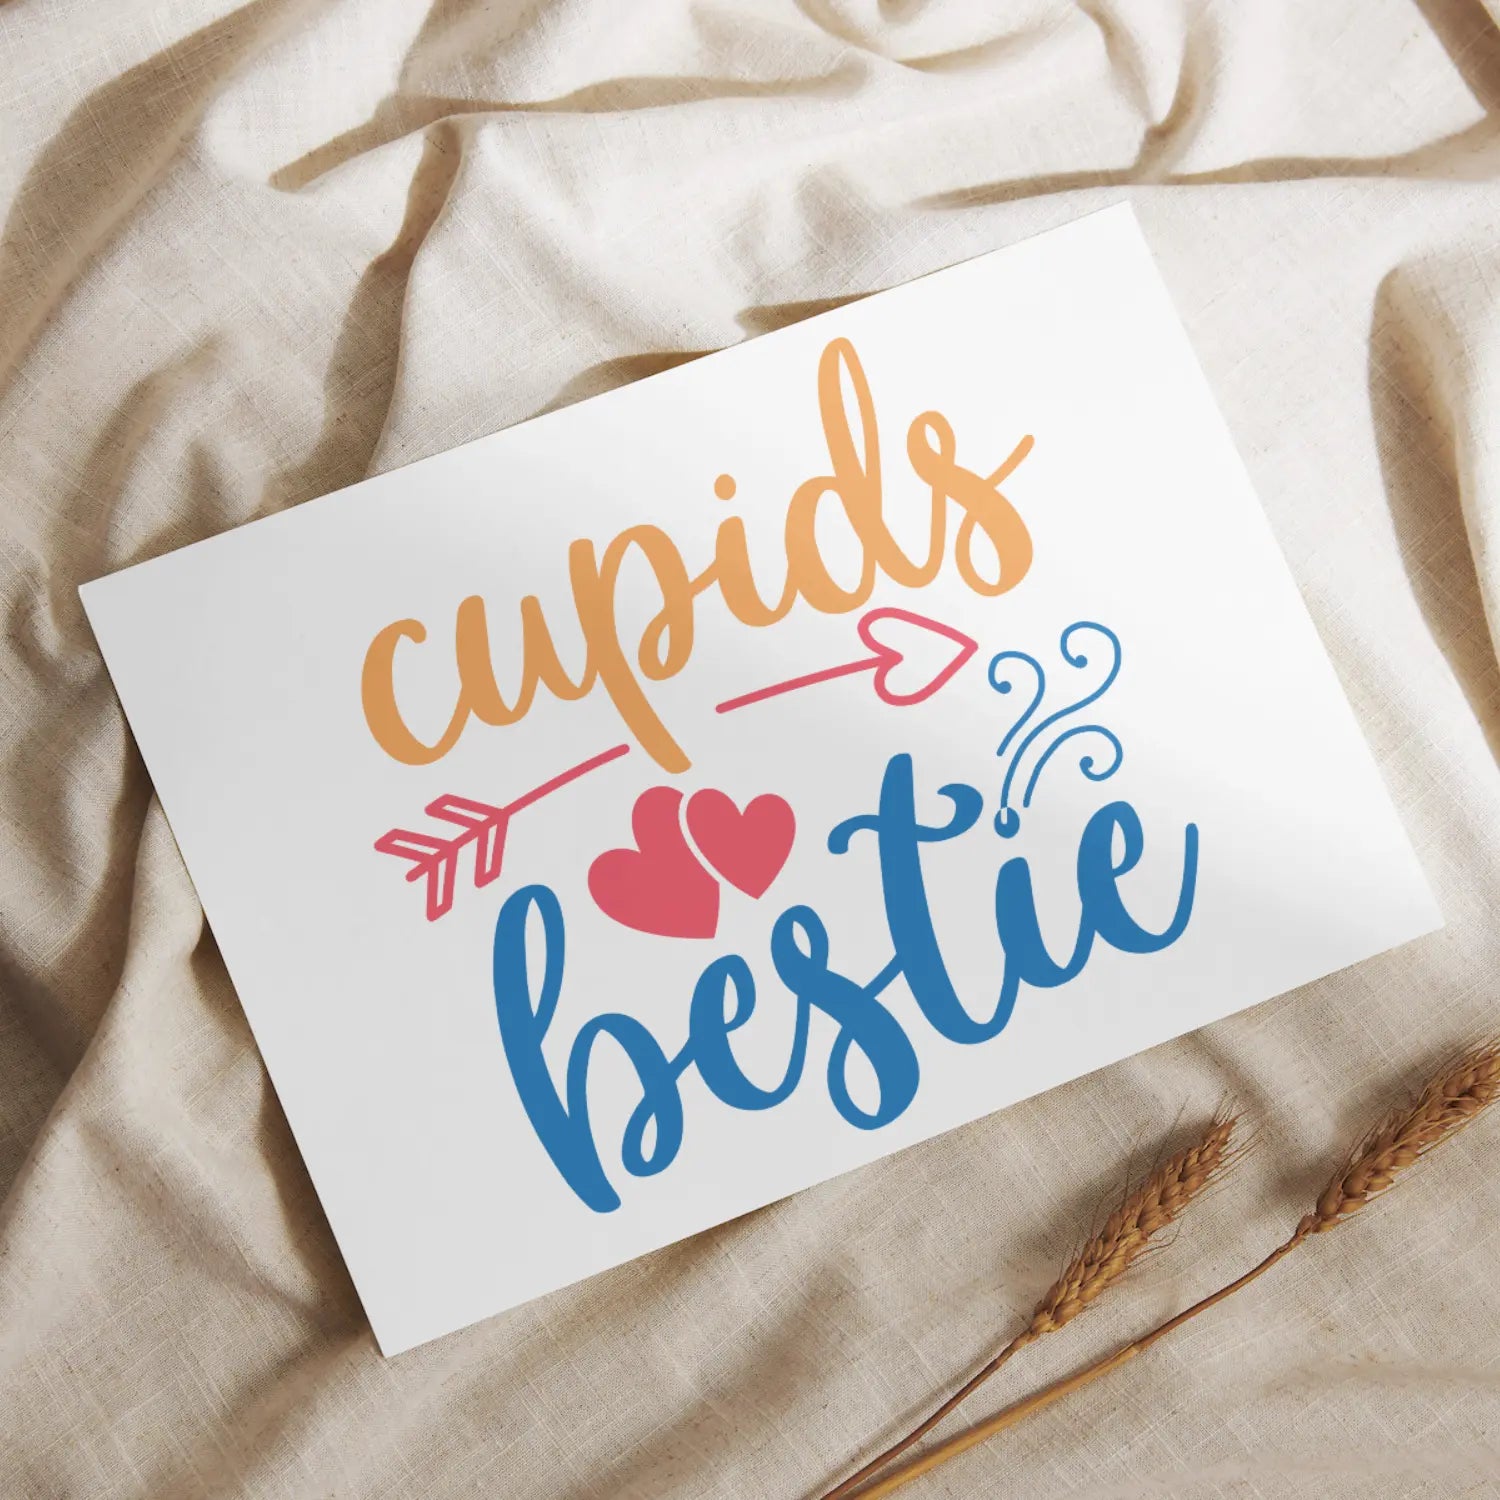 Cupids bestie SVG | Digital Download | Cut File | SVG Only The Sweet Stuff